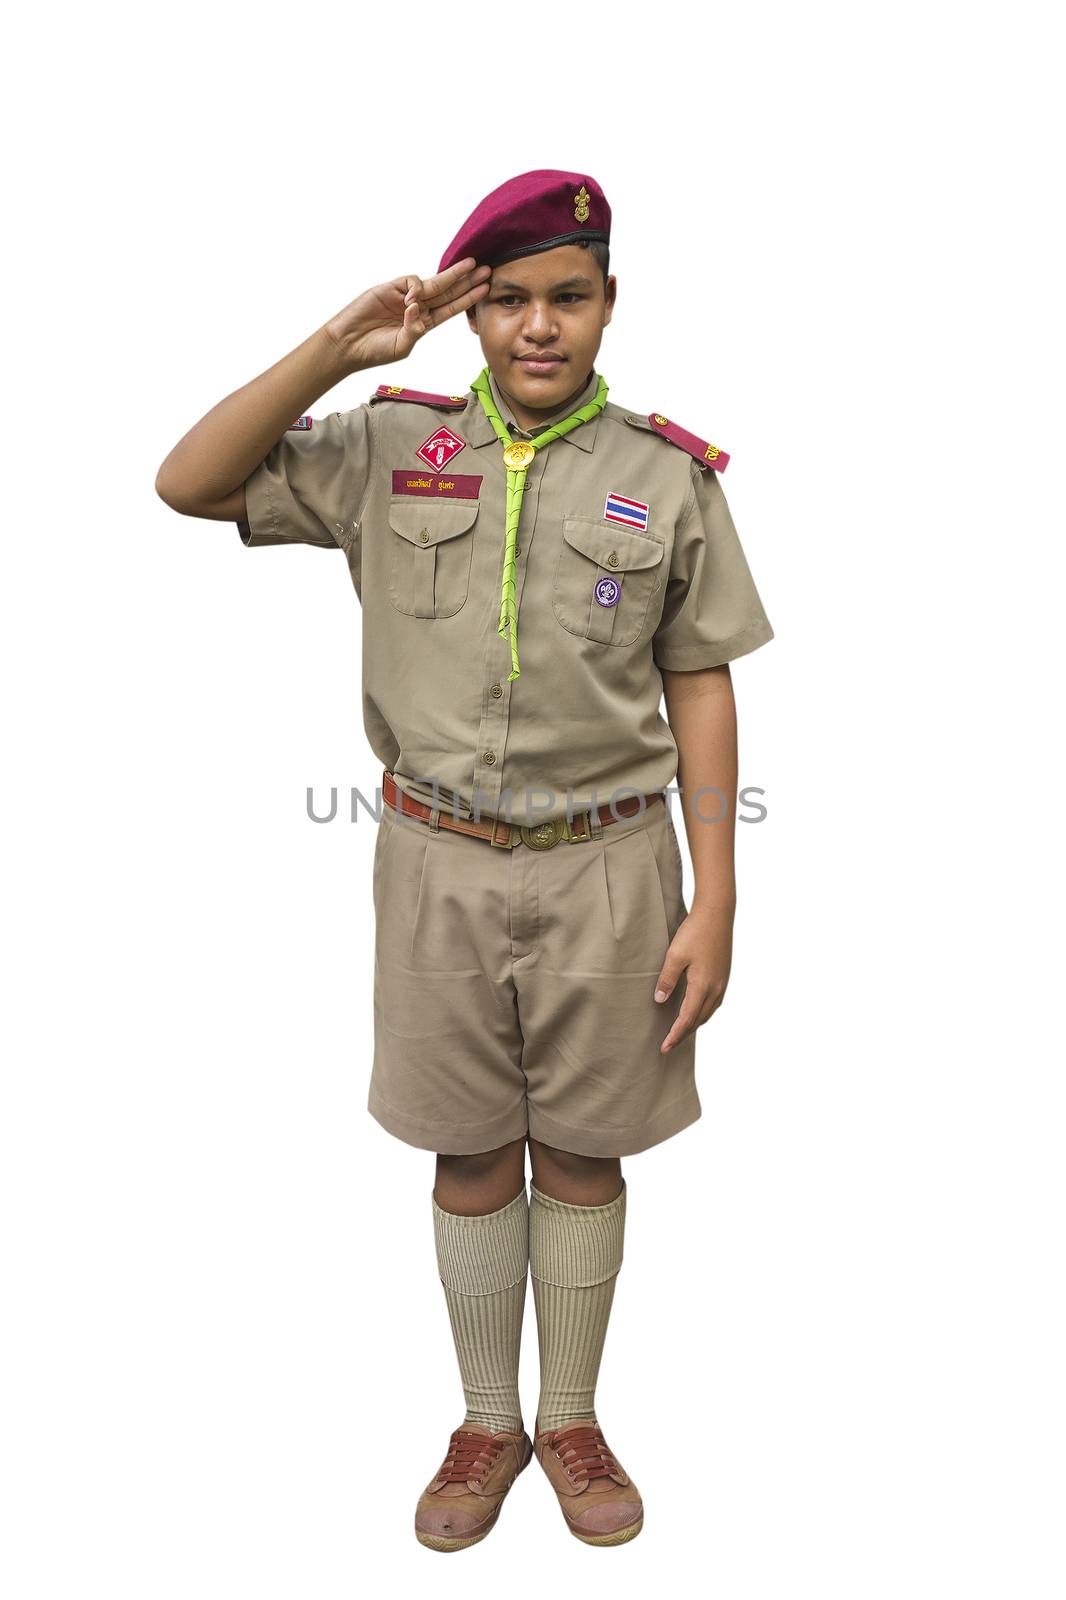 Thai boyscout isolated on white background